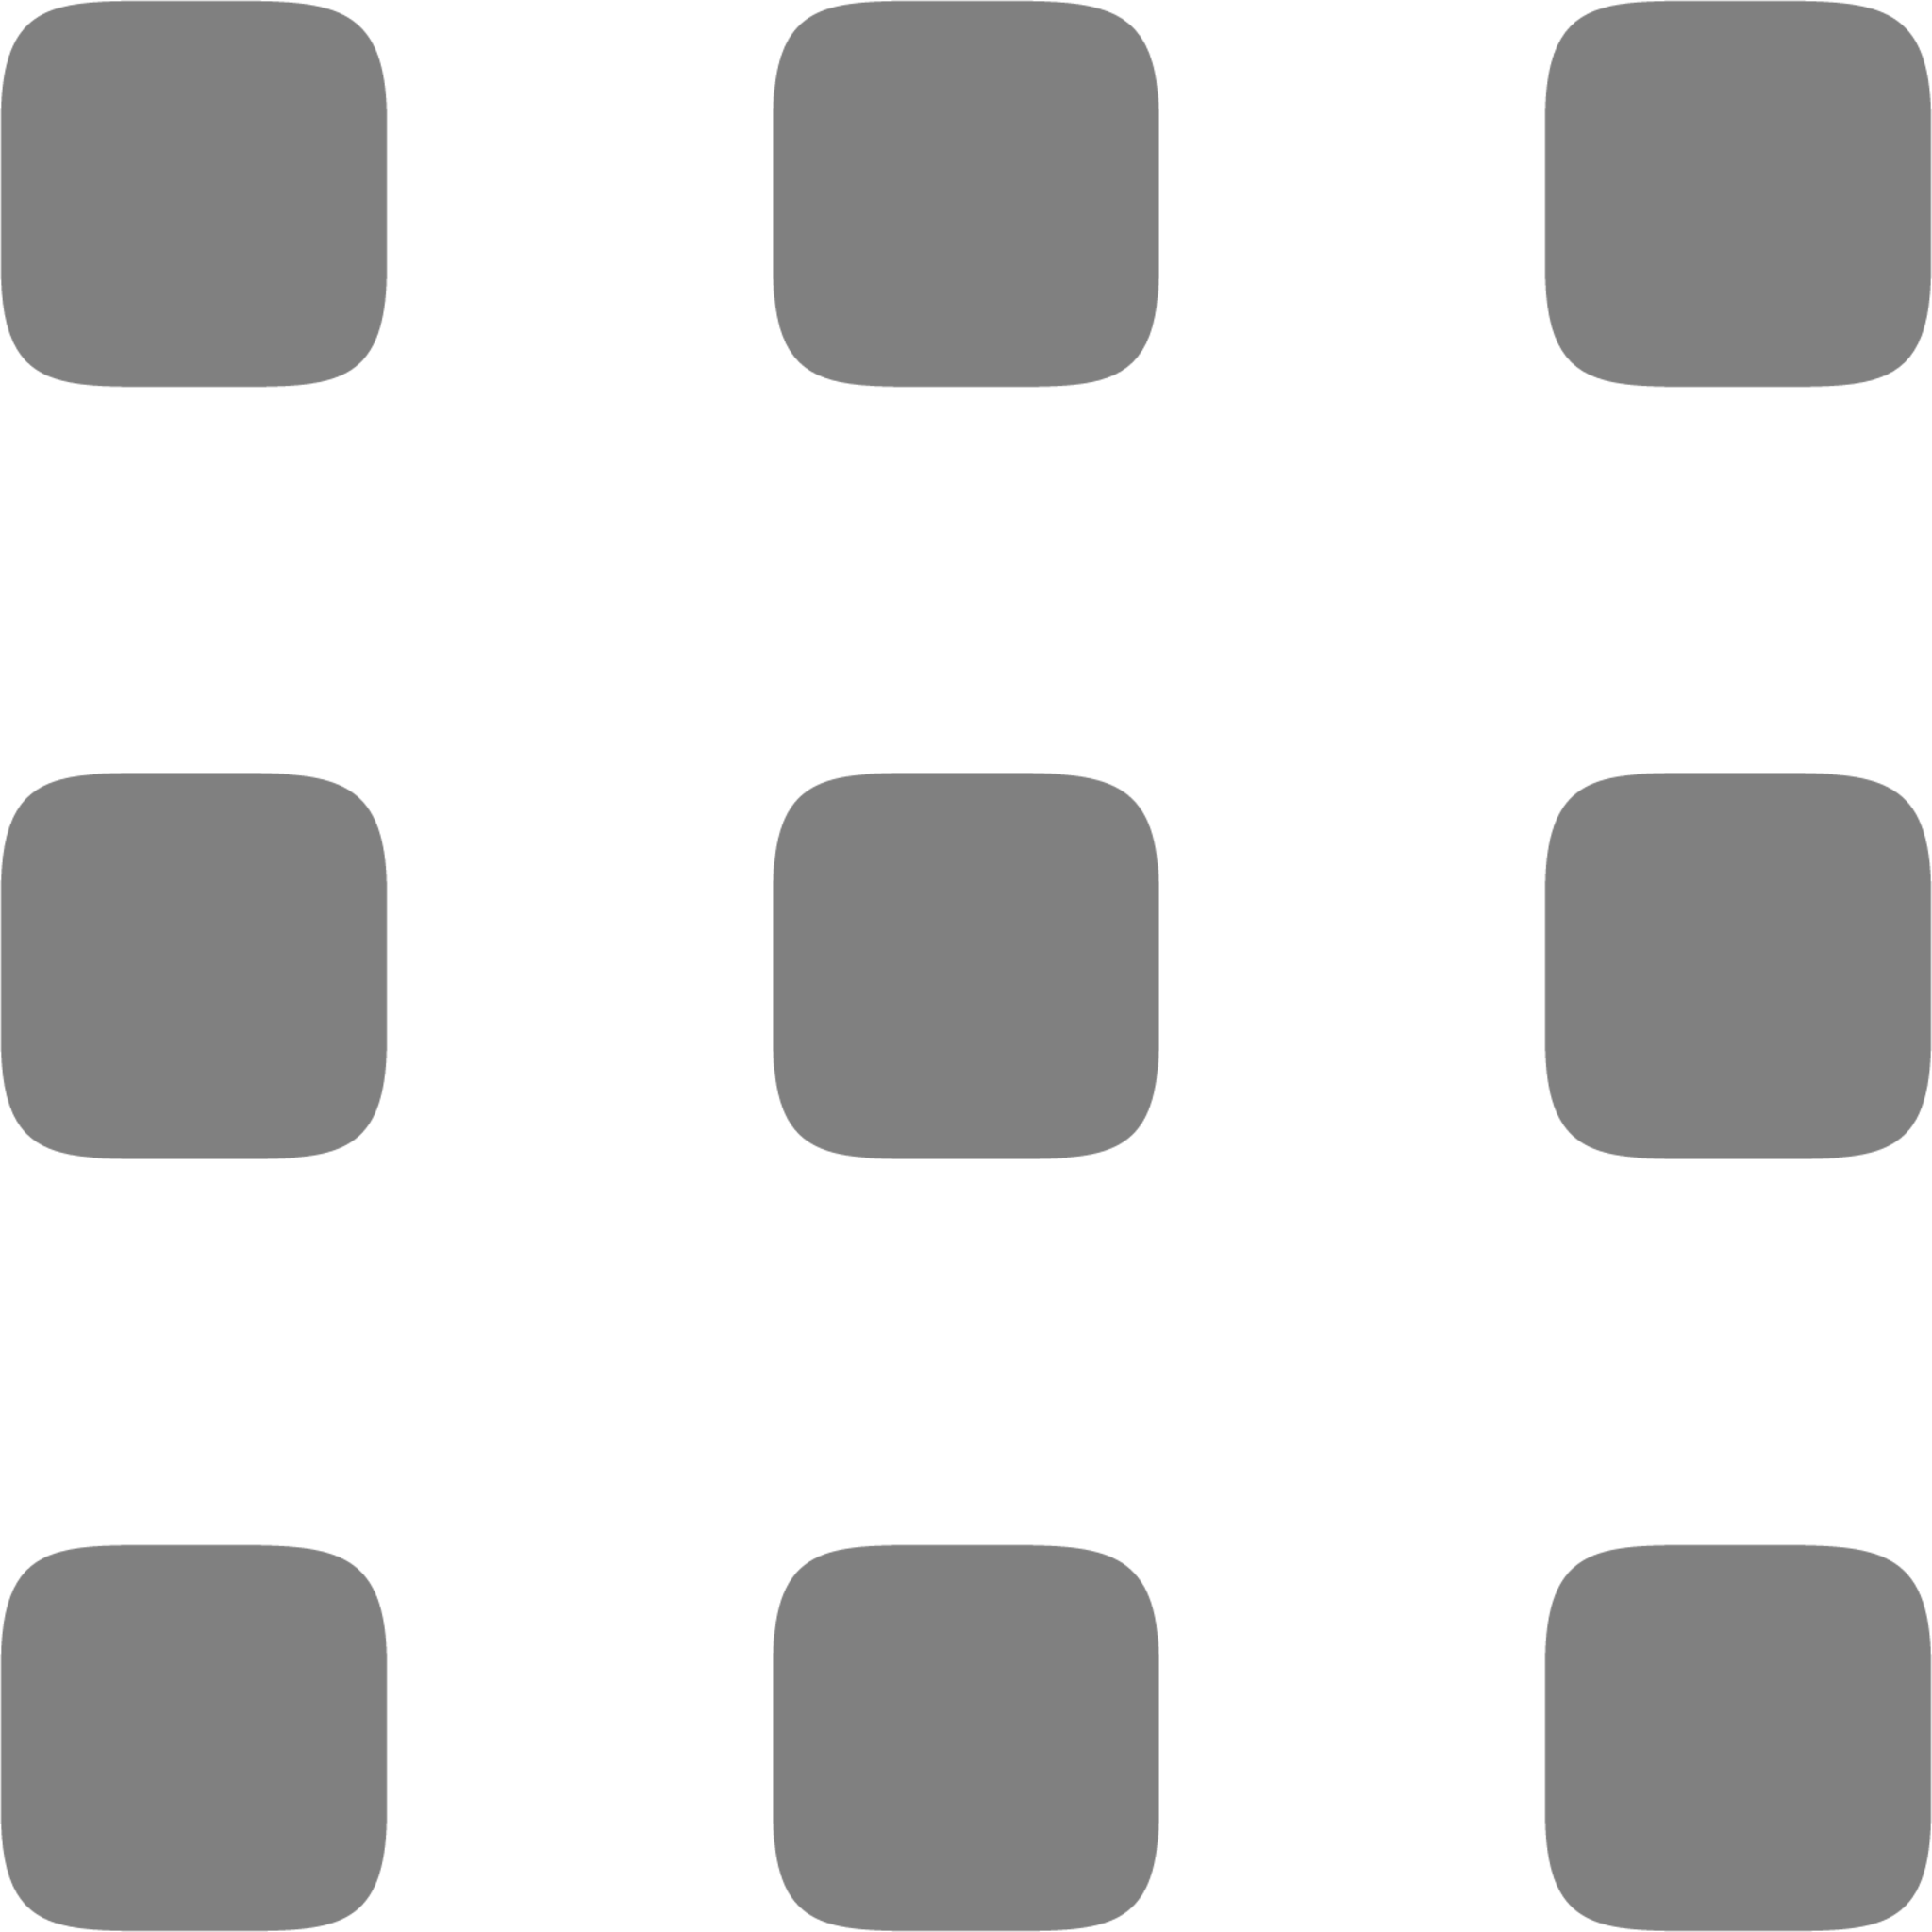 view app grid symbolic icon